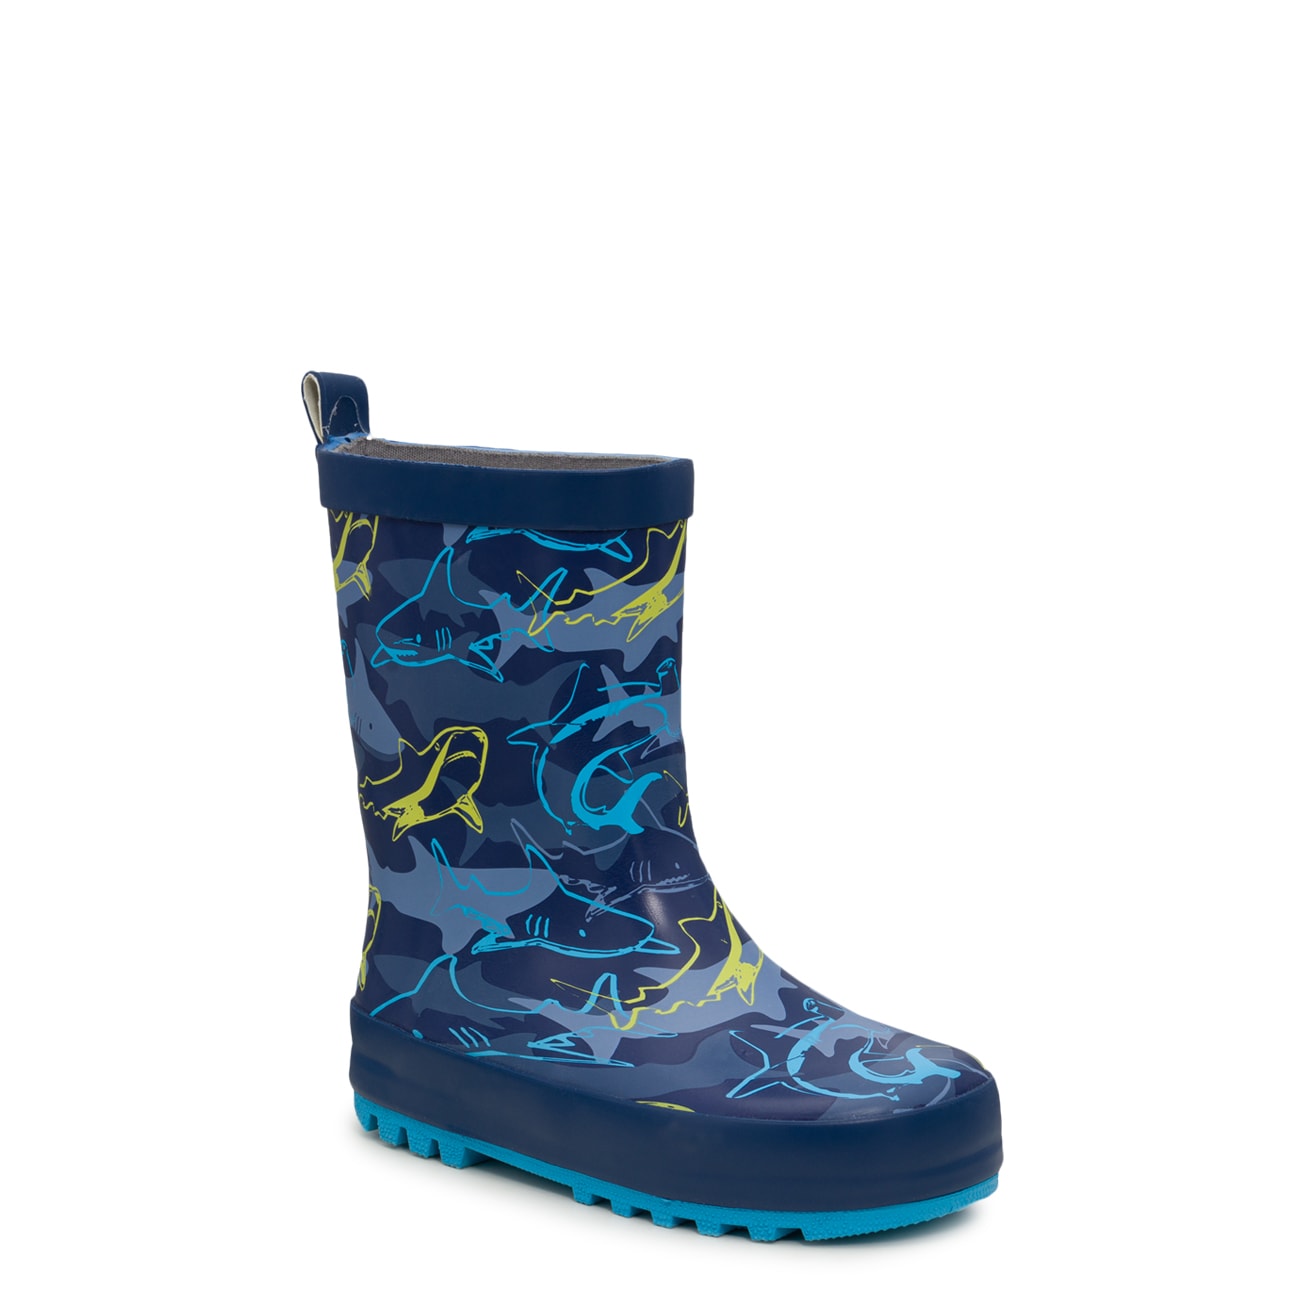 Toddler Boys' Zaf Waterproof Rain Boot